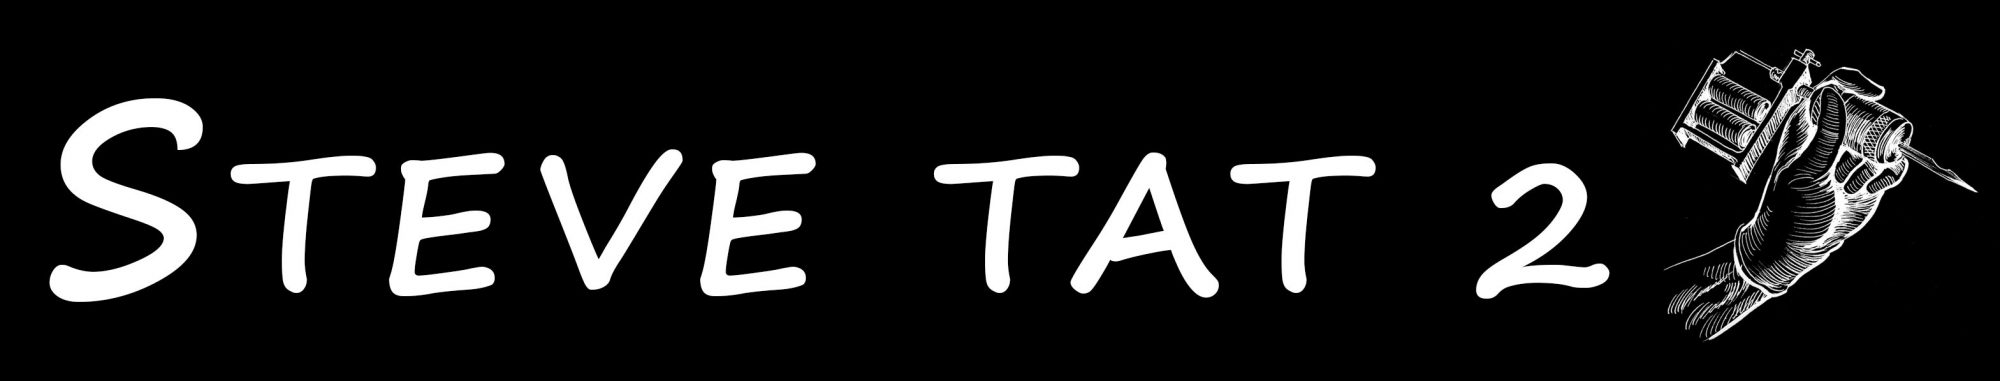 Steve Tat 2 New Logo